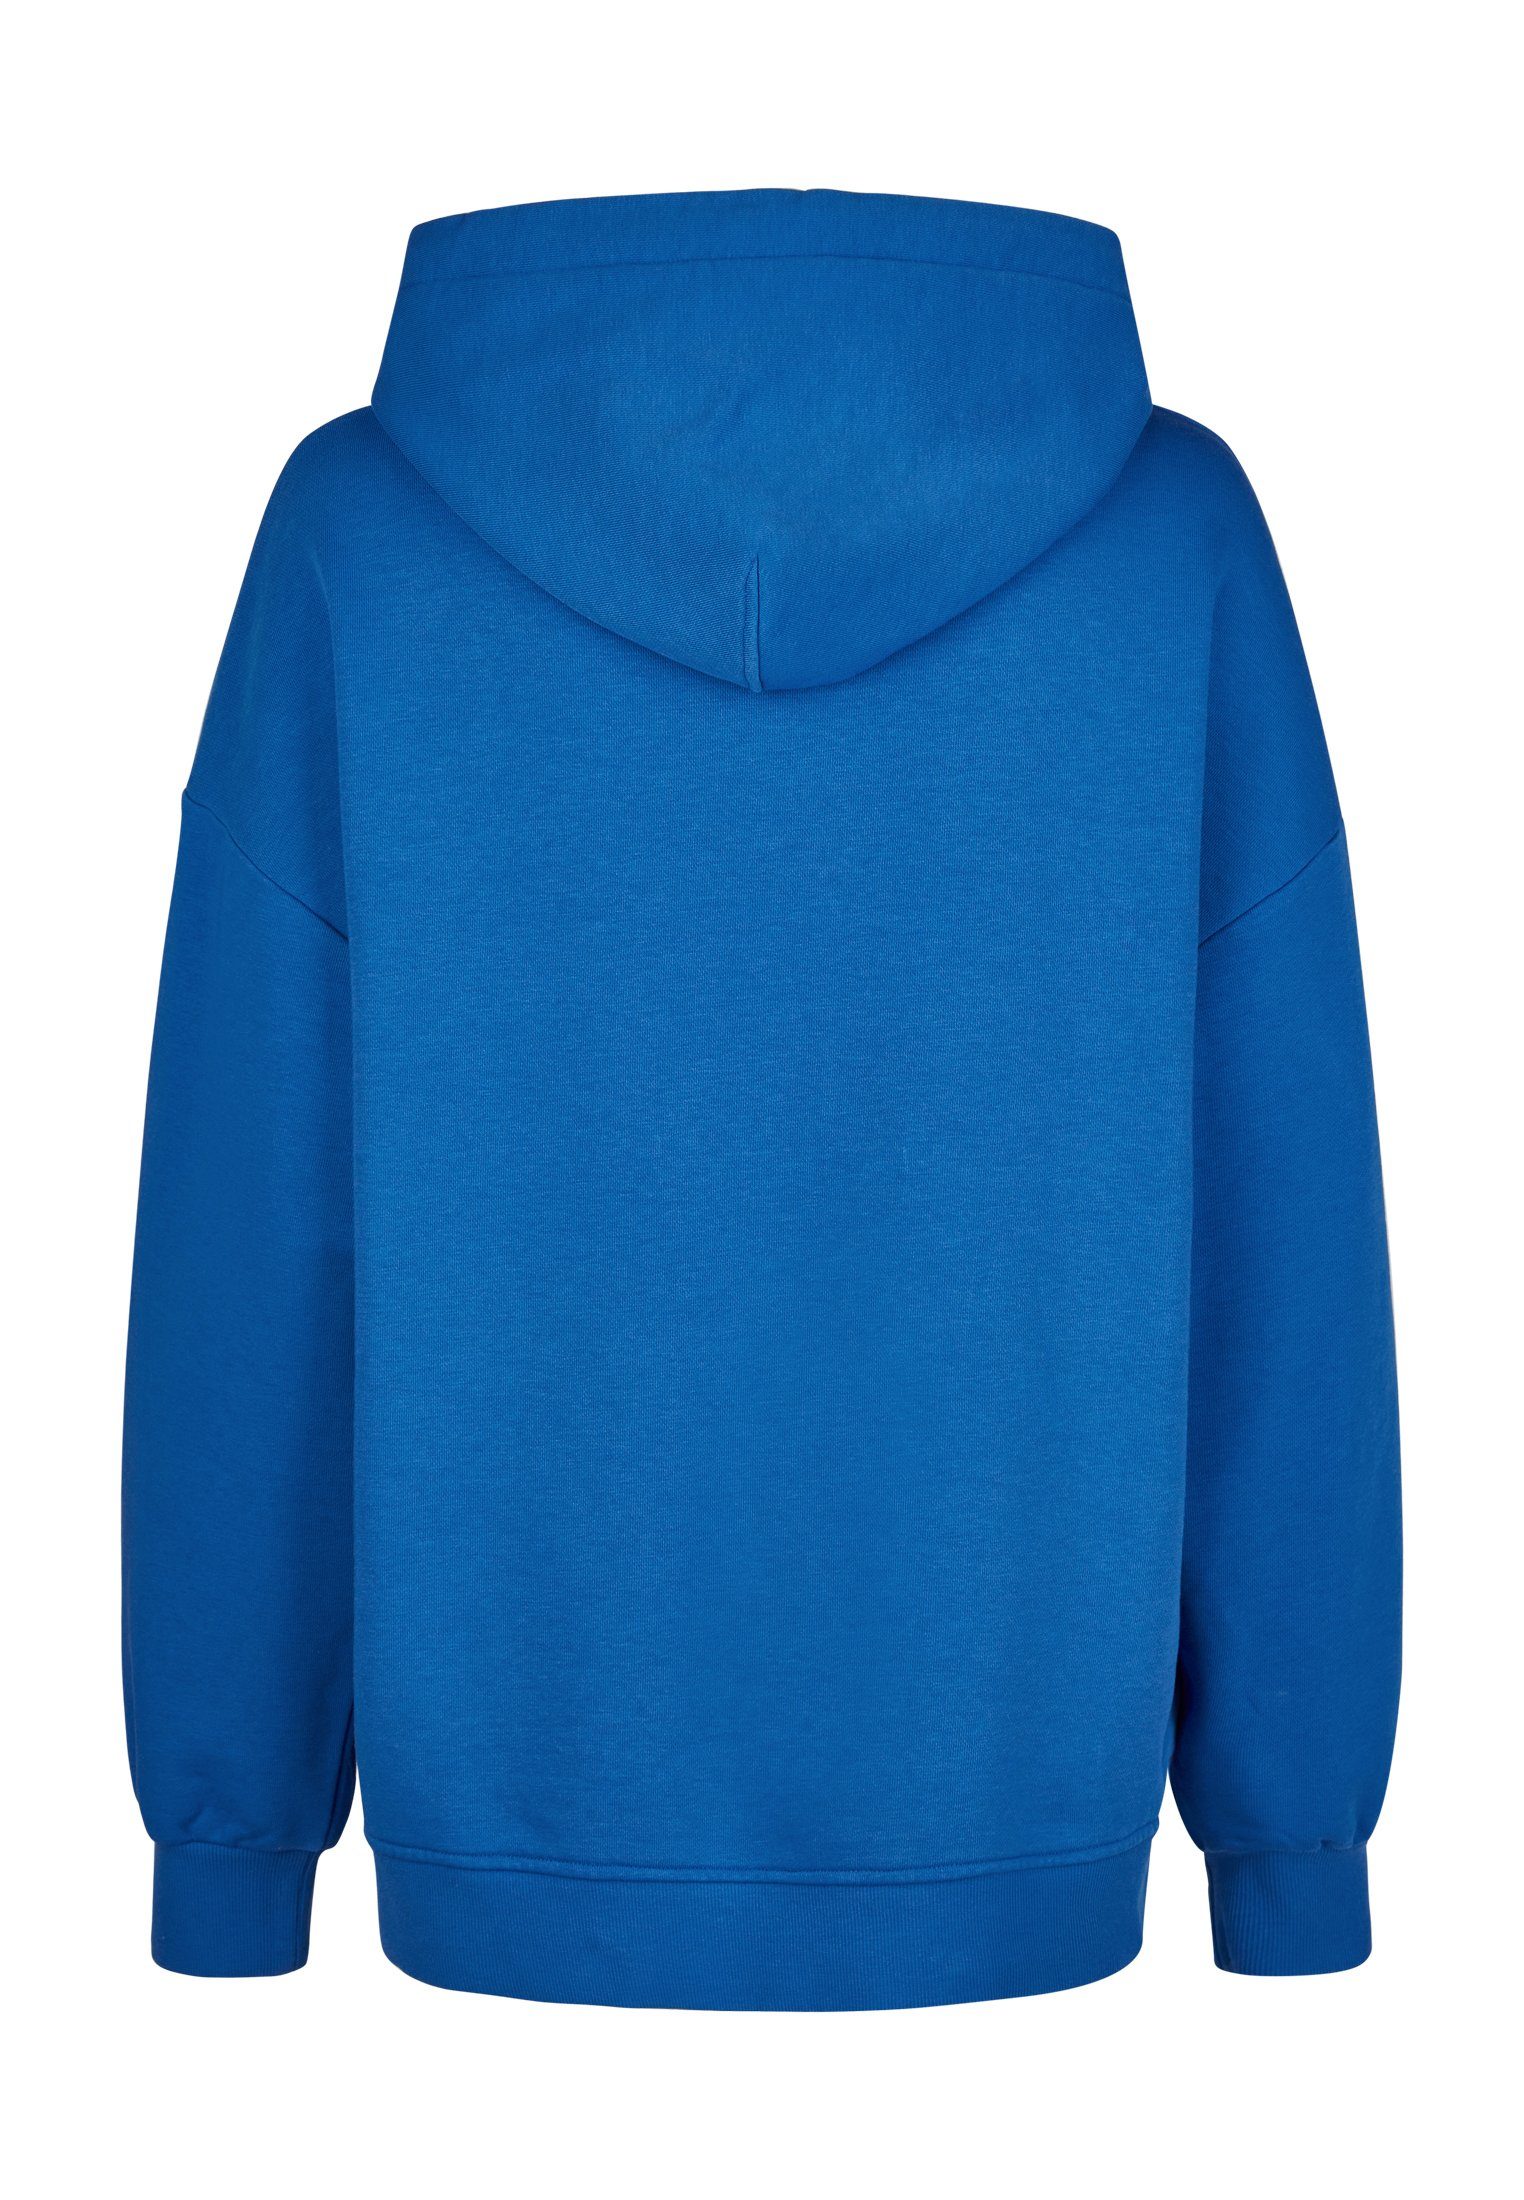 strong blue mit varied AUREL Going" Print "Keep MARC Sweatshirt